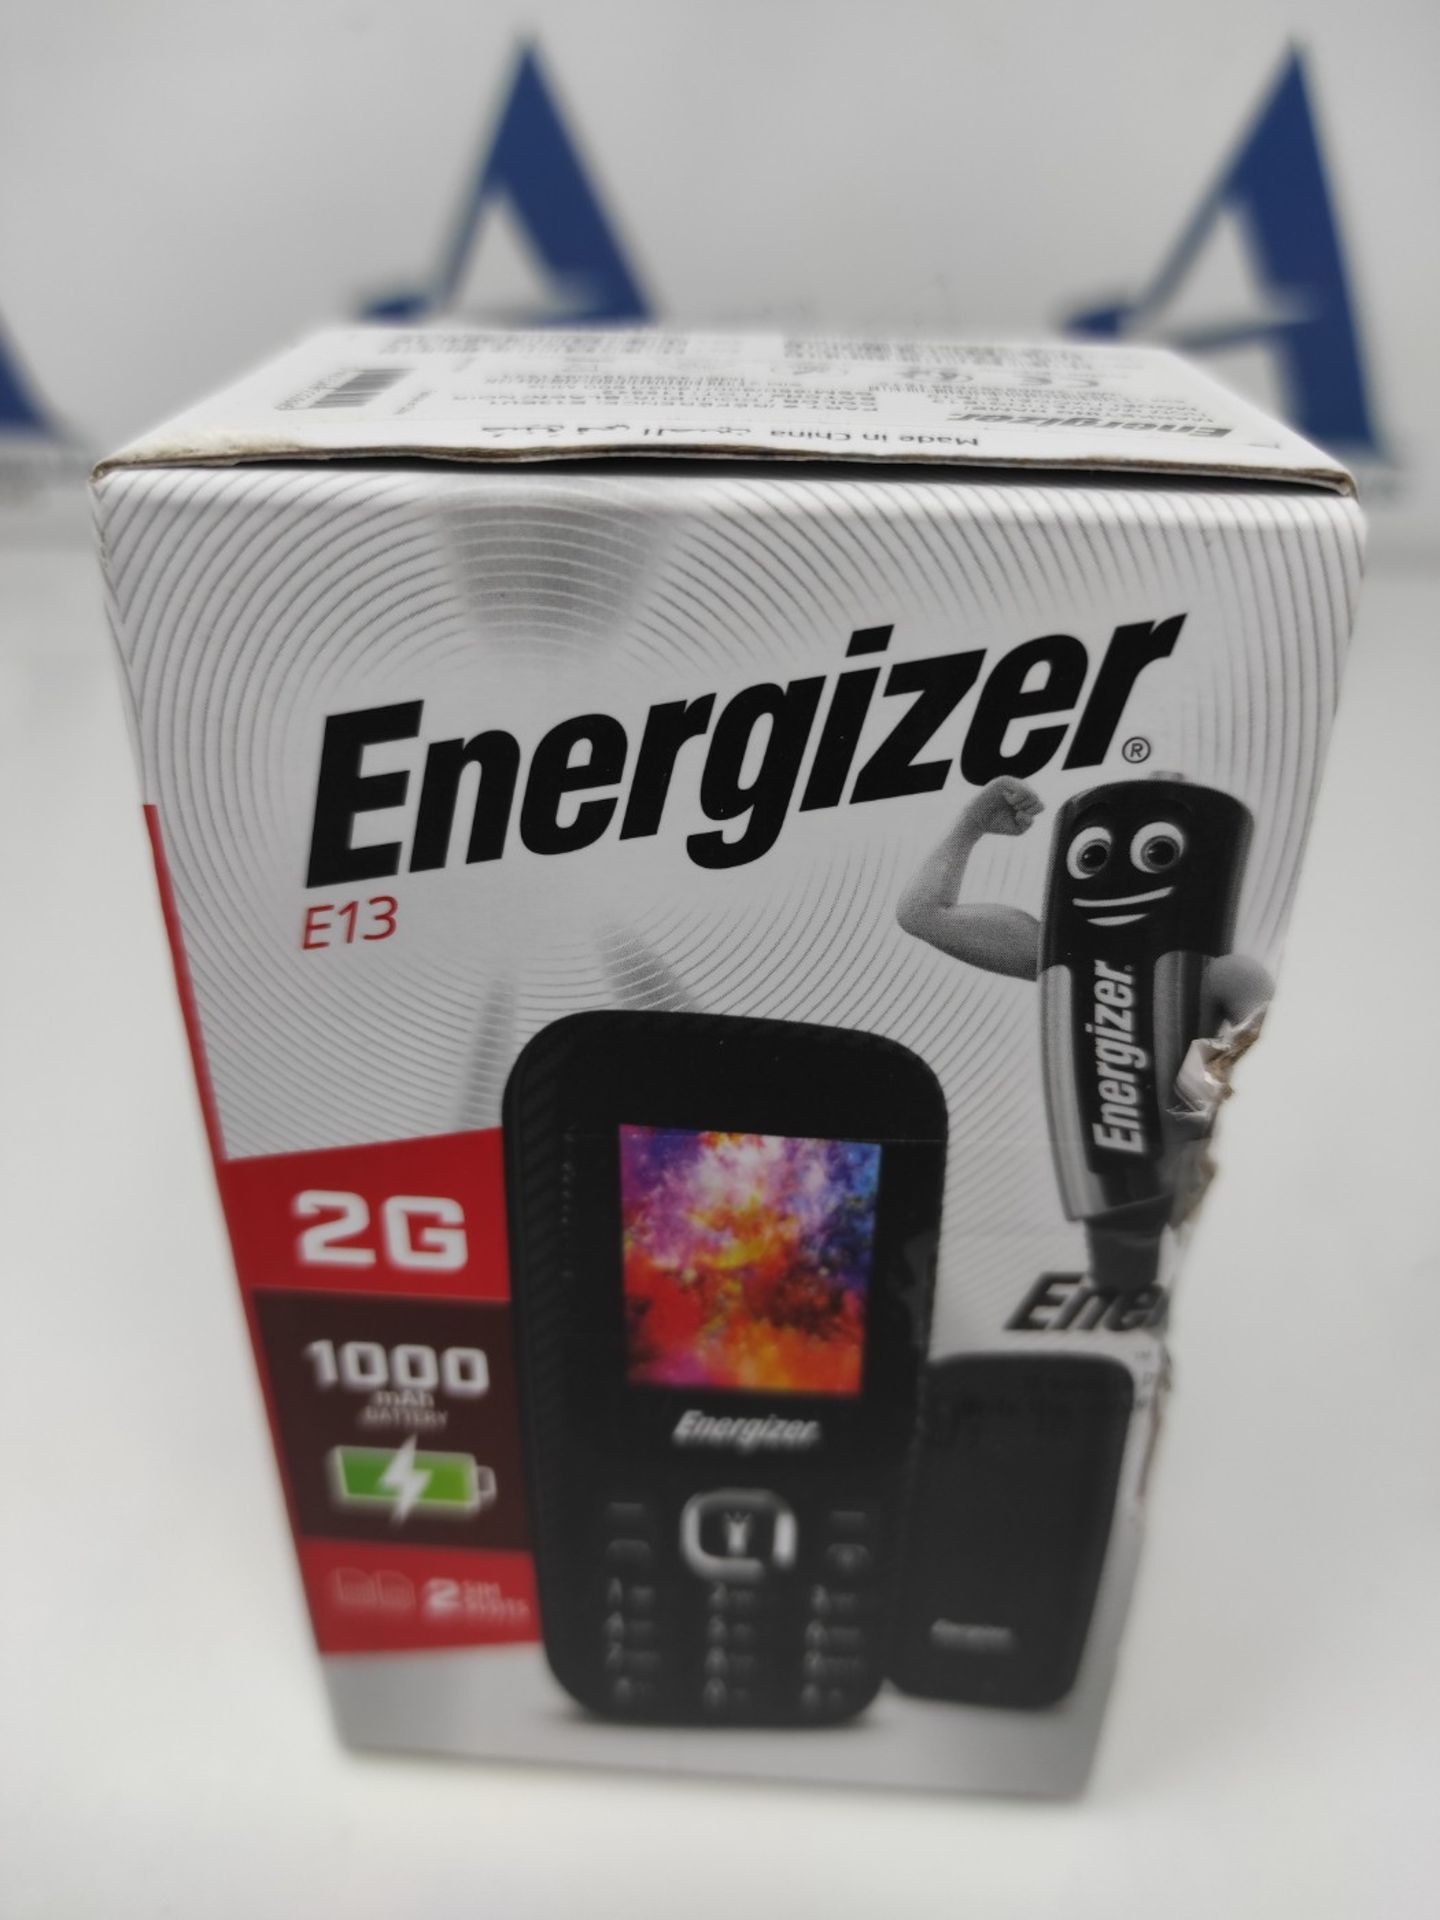 Energizer - Mobile E13-2G - Dual Sim Mobile Phone - Black - Mini SIM - Unlocked - Torc - Image 2 of 3